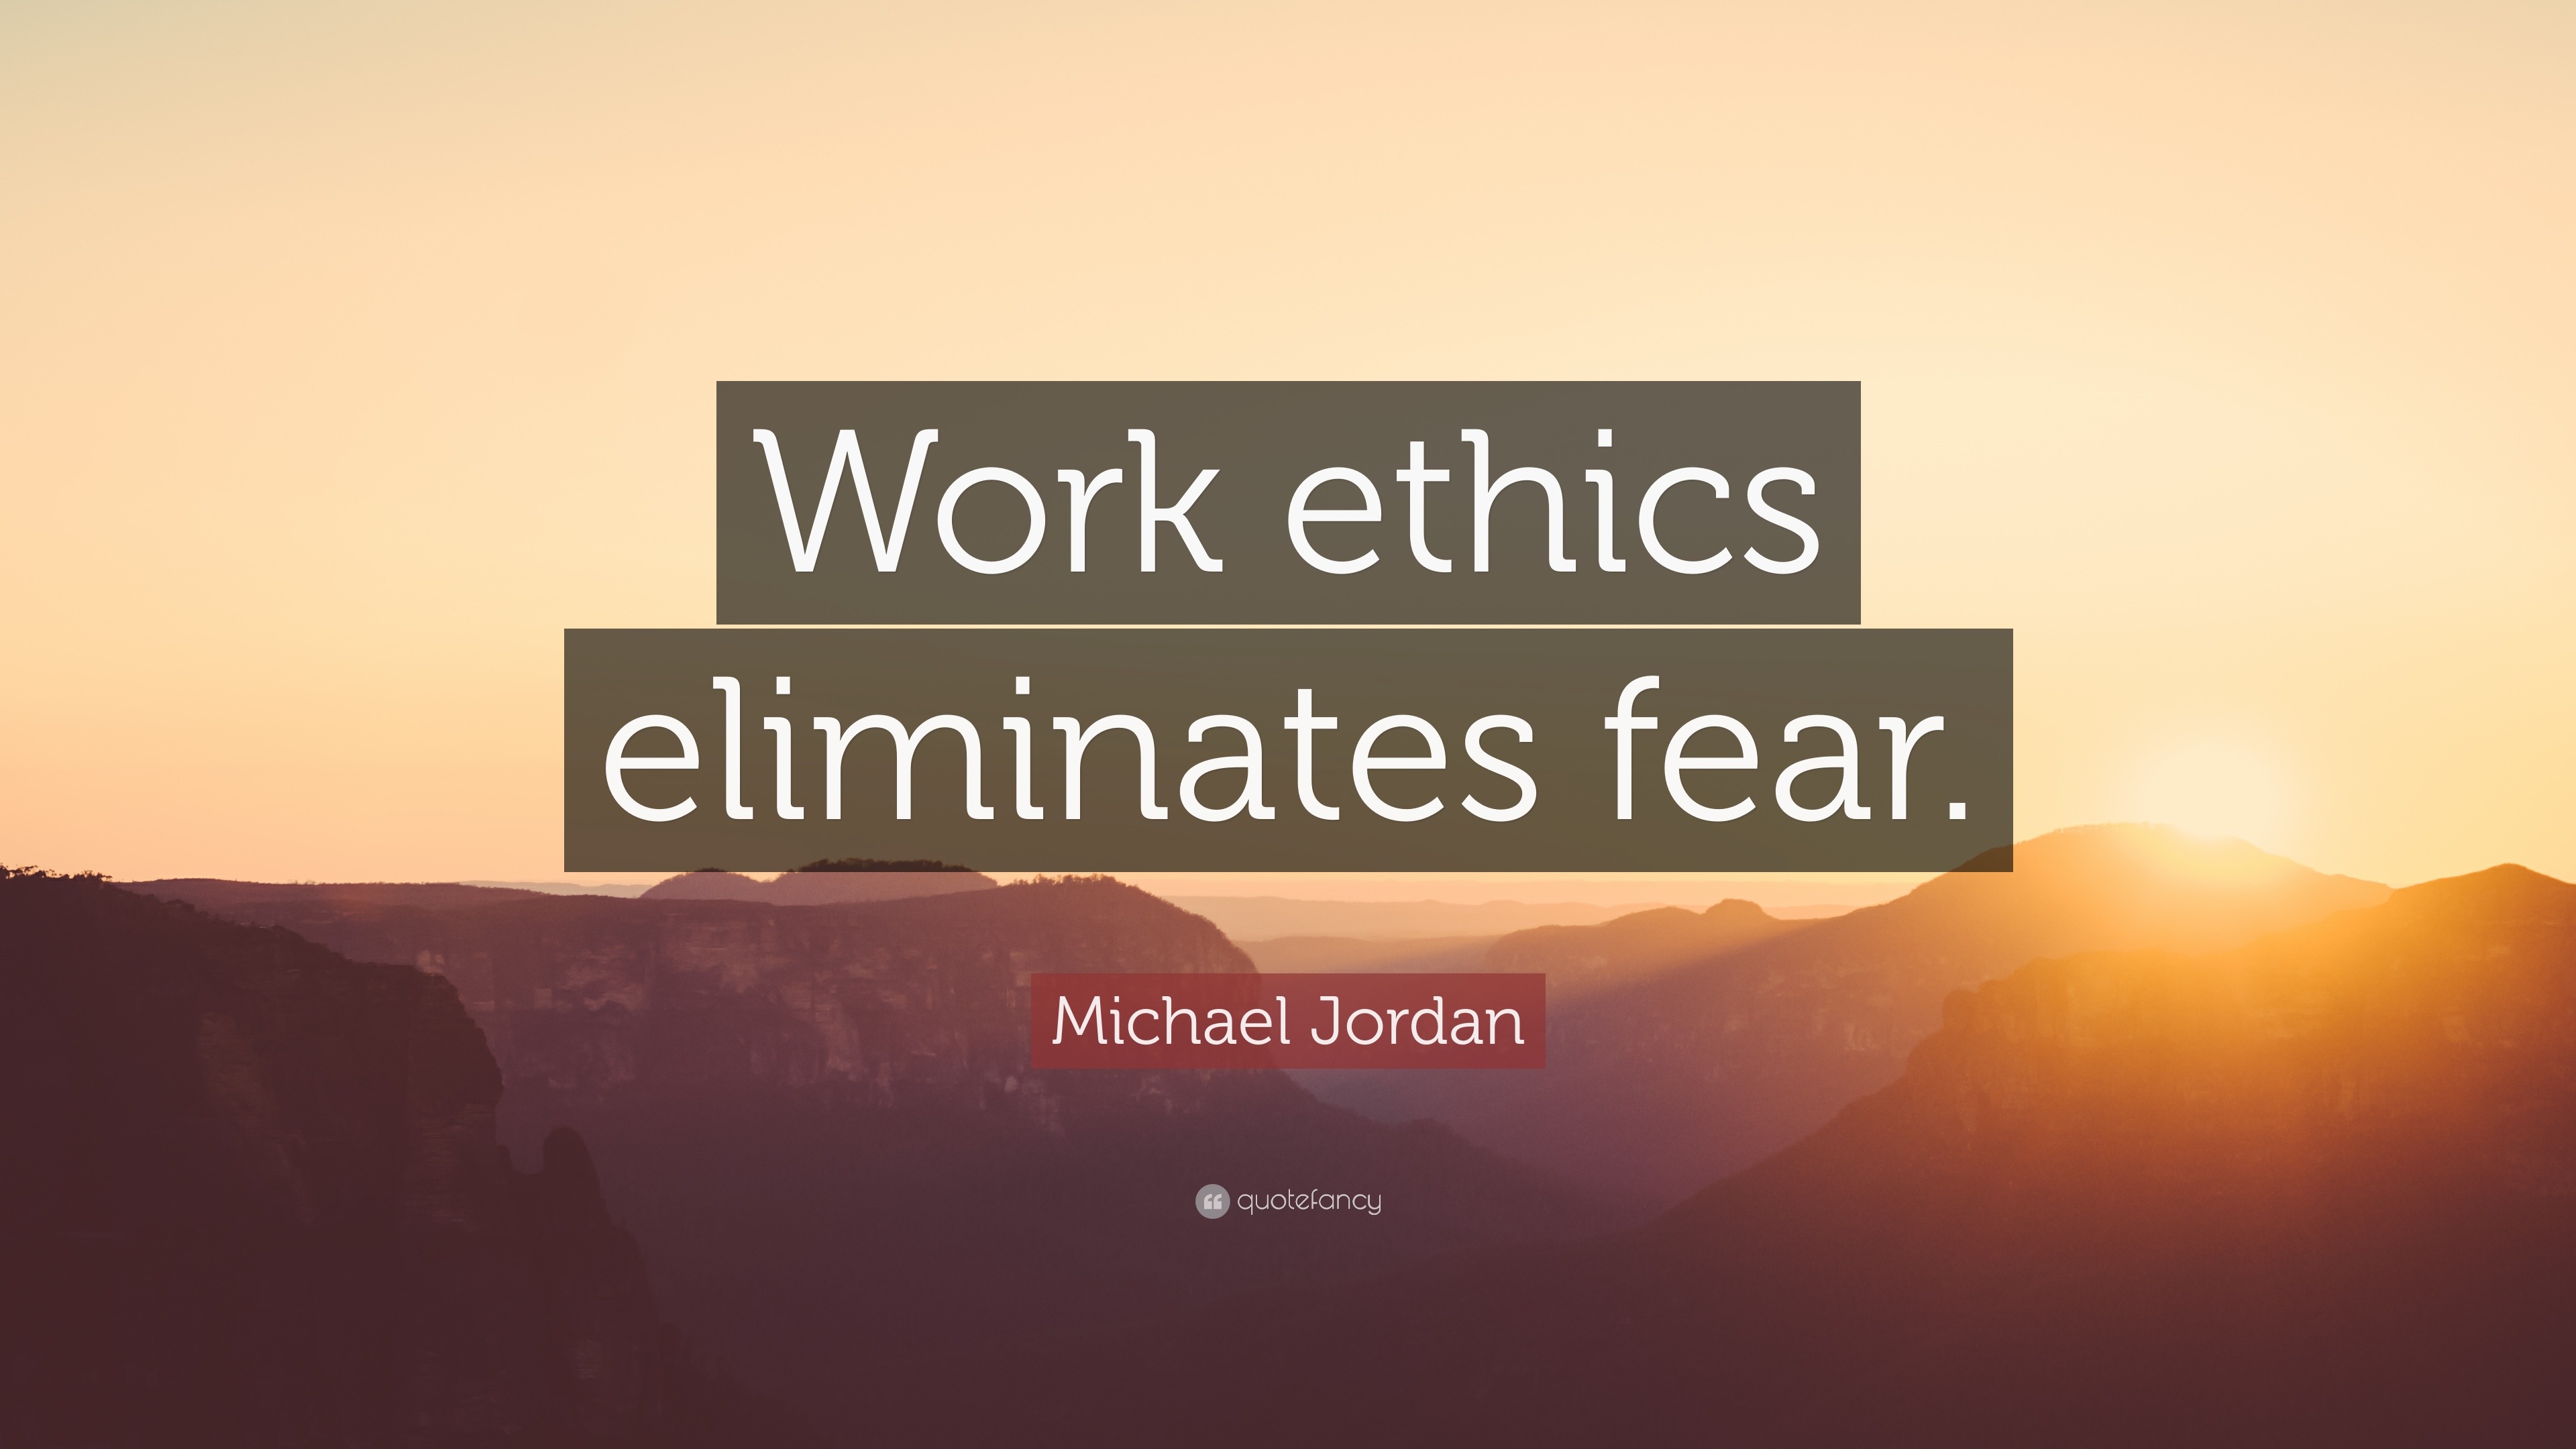 Michael Jordan Quote: “Work ethics eliminates fear.” (12 wallpapers